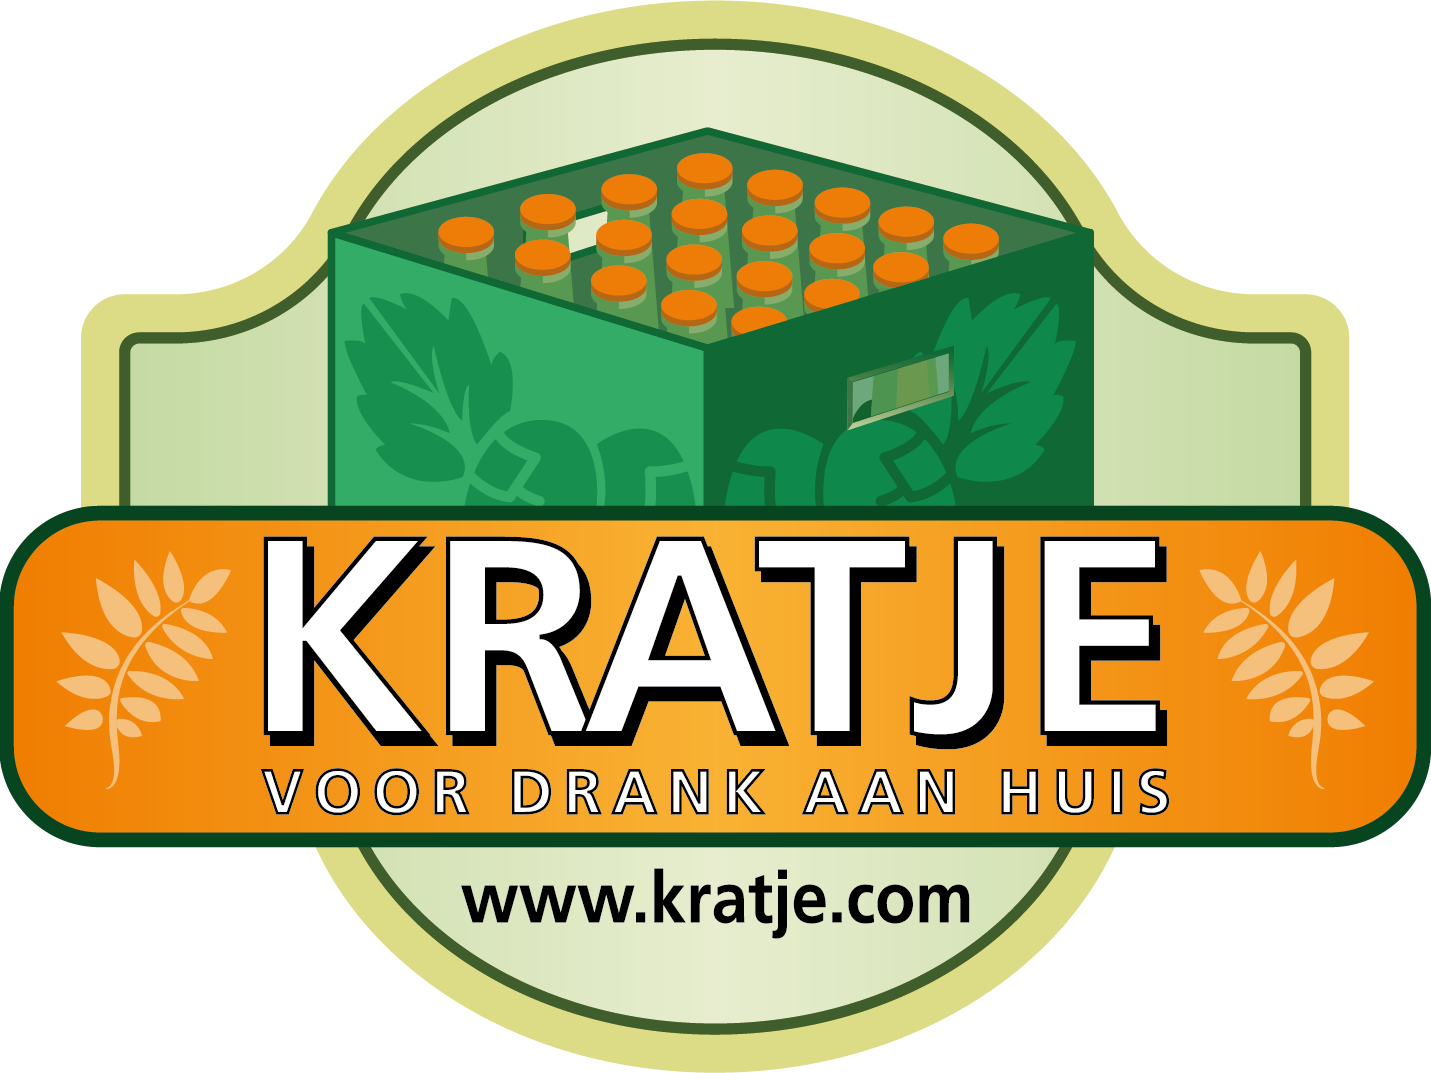 www.kratje.com